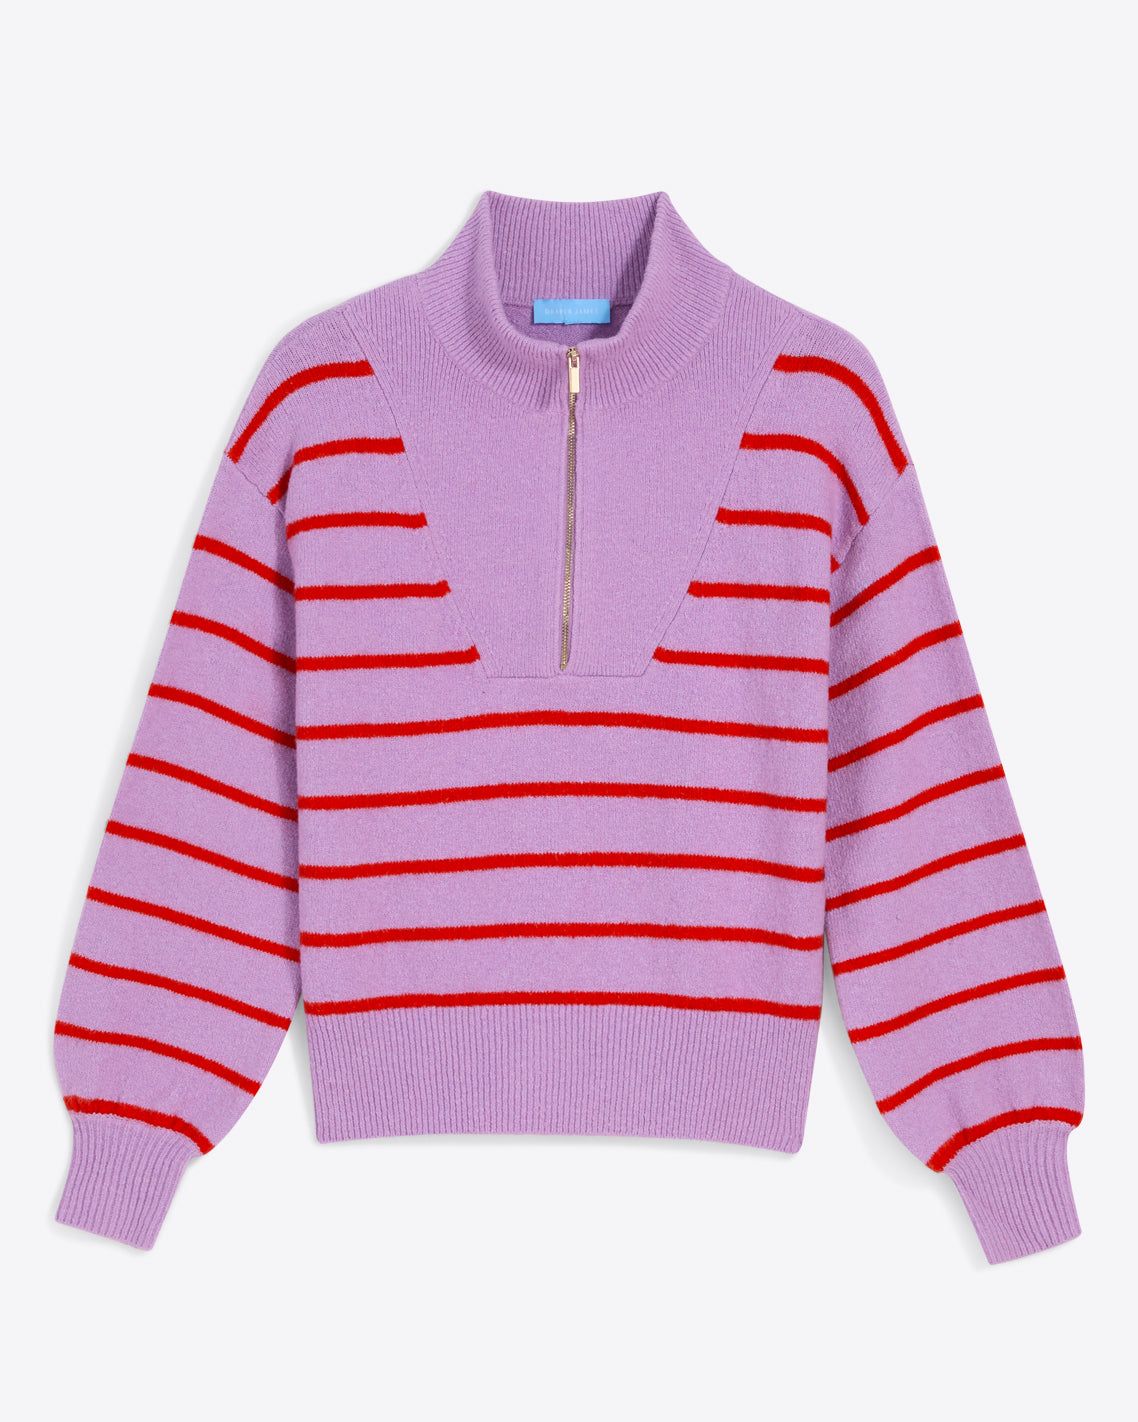 Striped Quarter Zip Sweater in Mariner Stripe | Draper James (US)